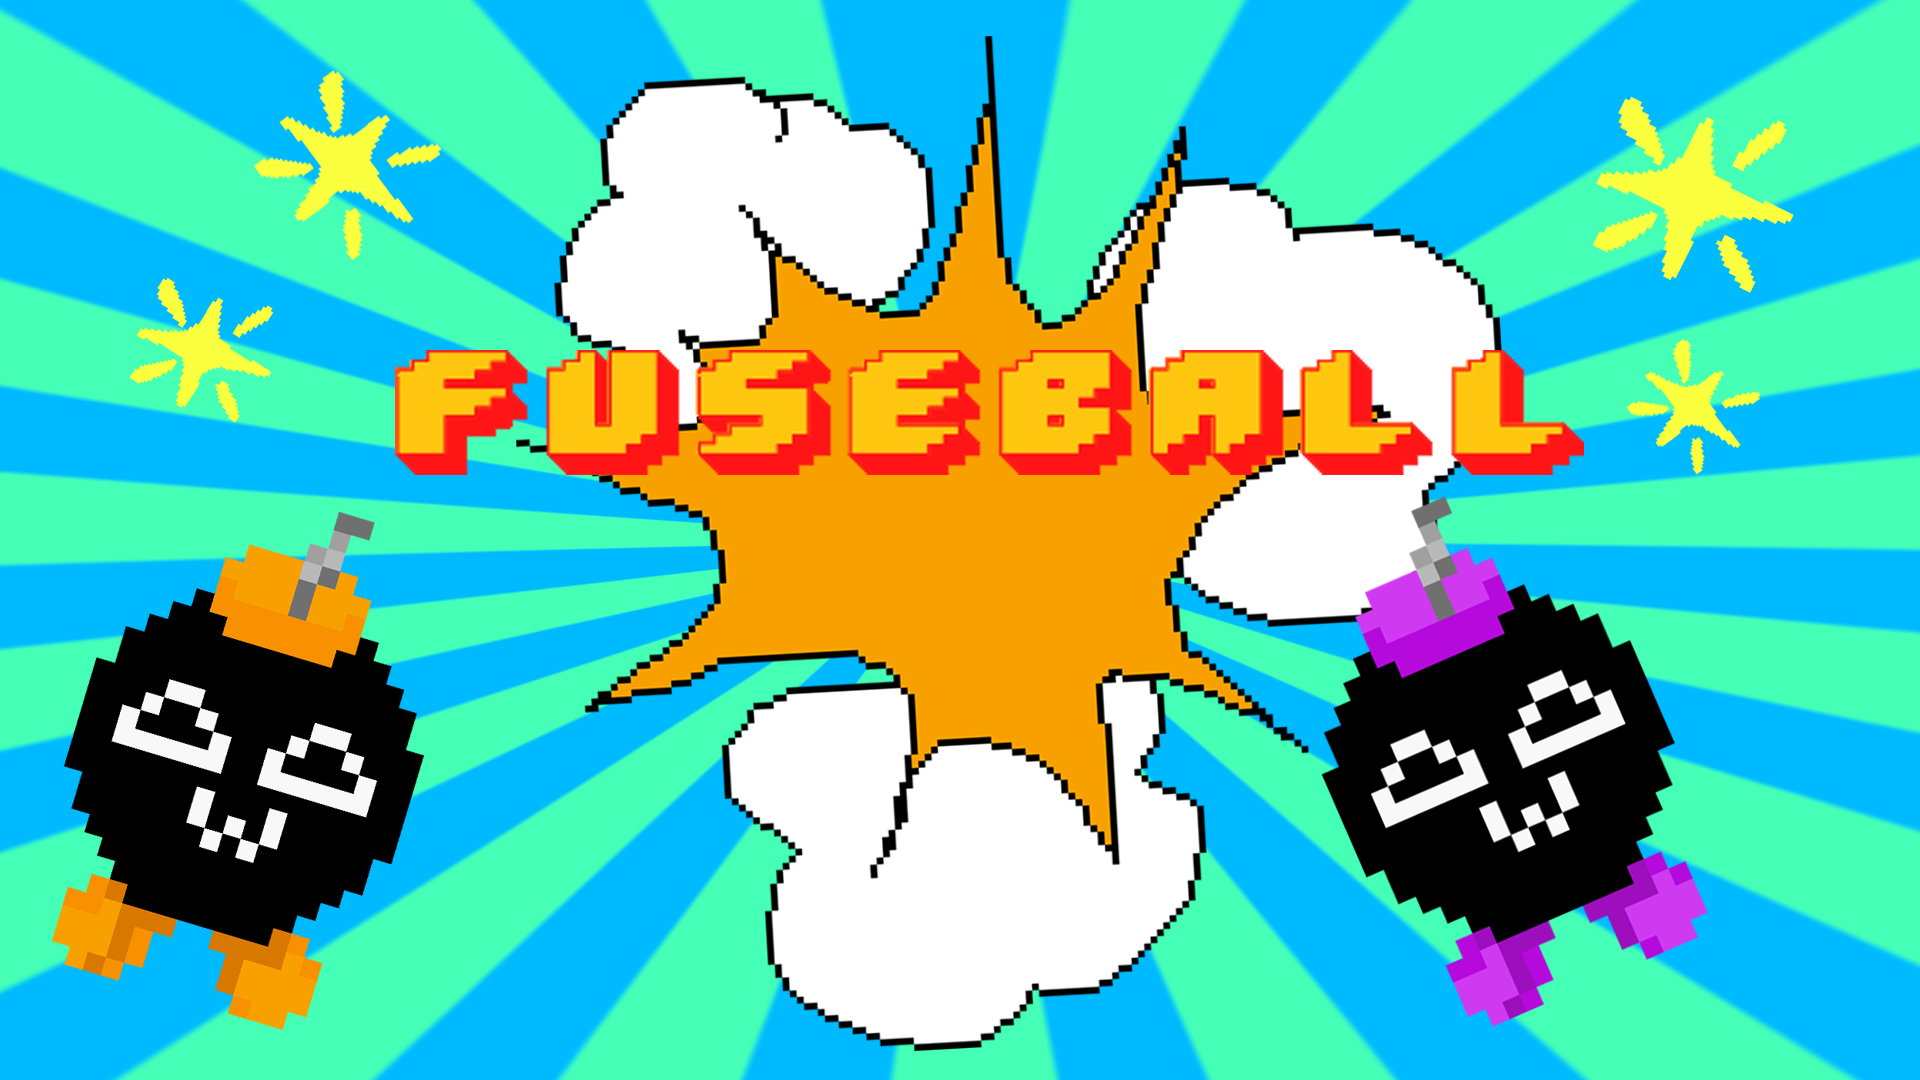 FuseBall